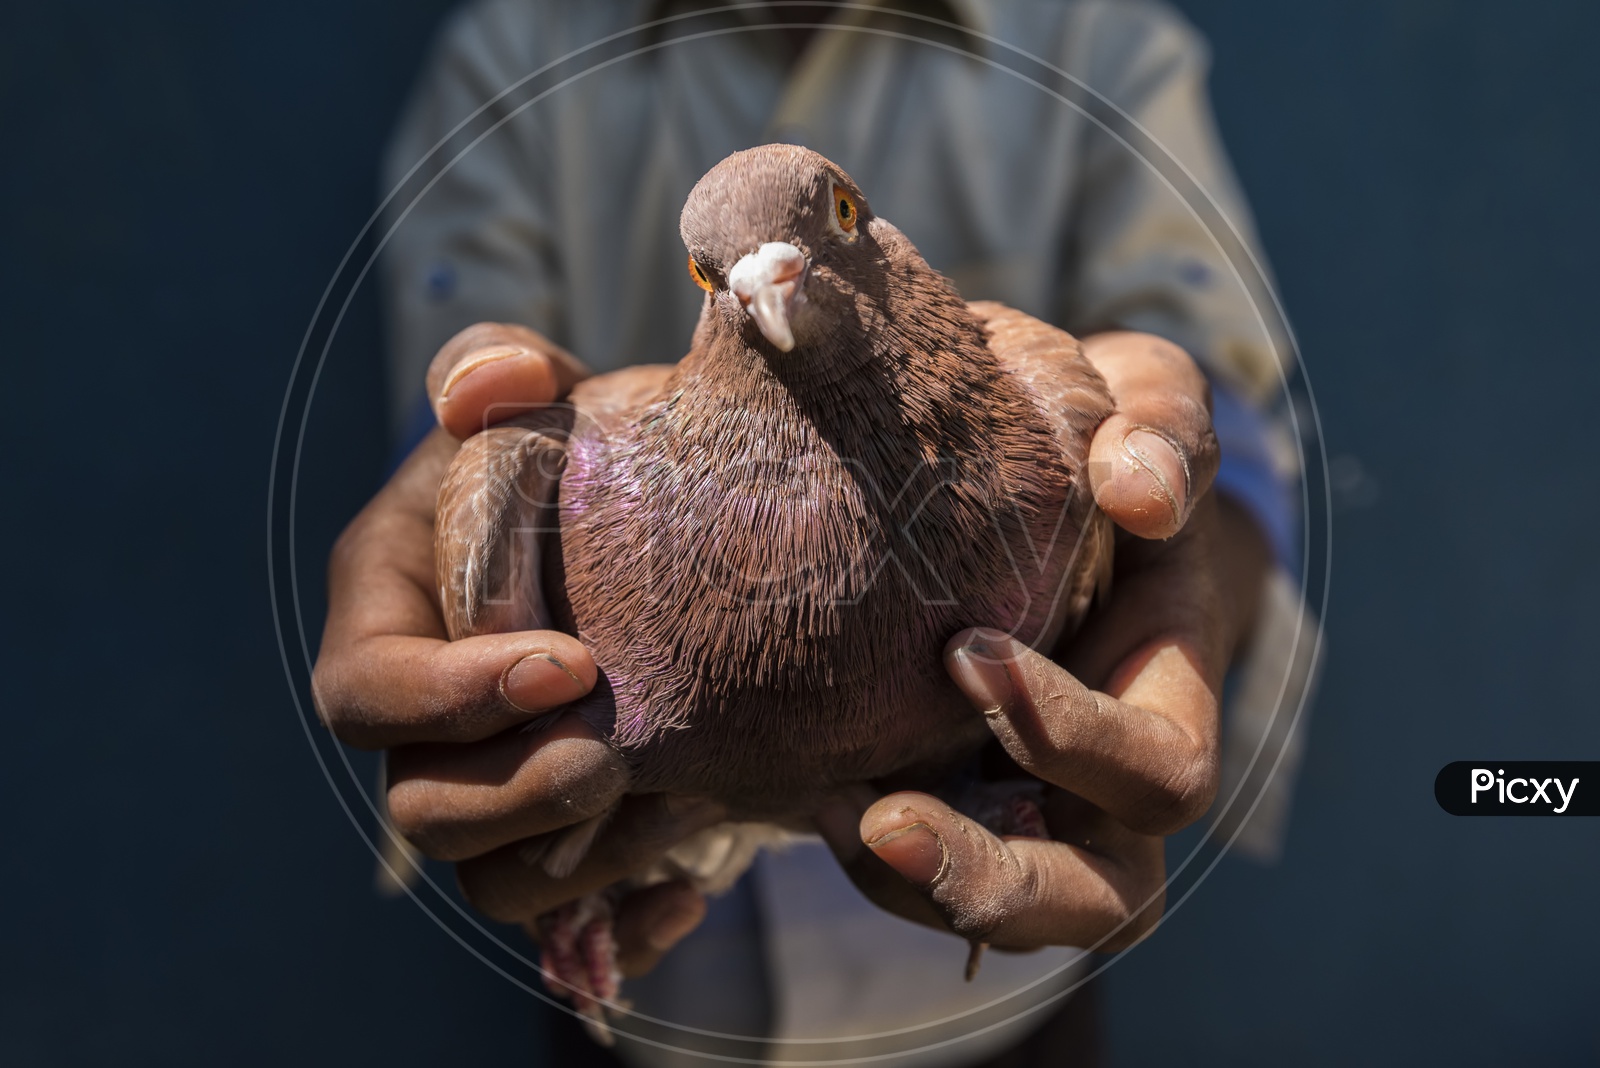 A Boy Holding Pigeon in hands Closeup Shot